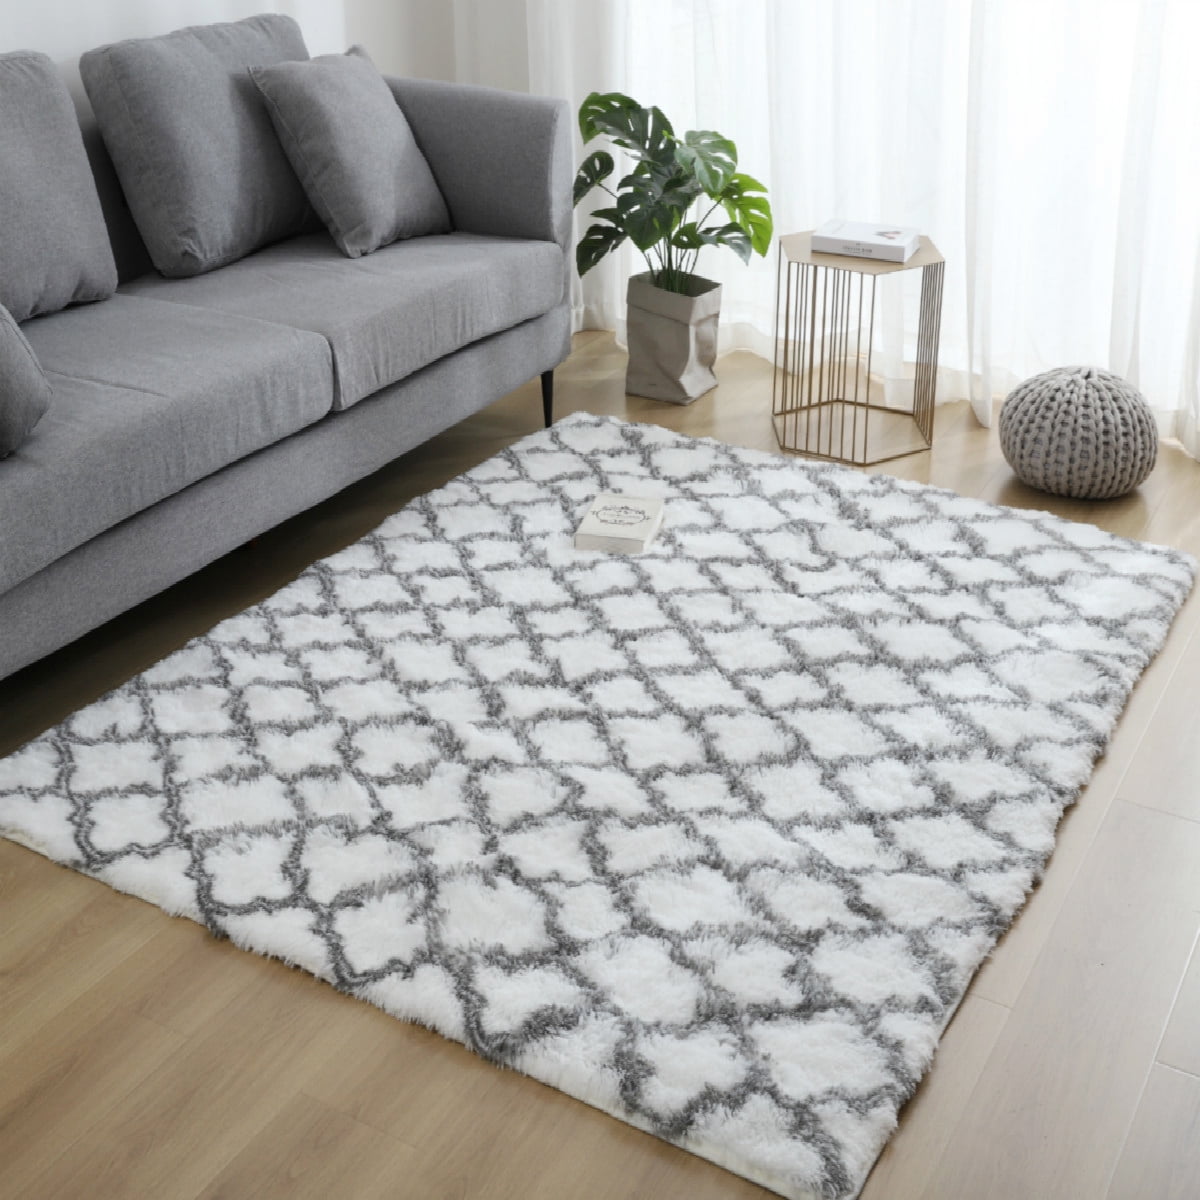 Large Fluffy Area Rugs Living Room Bedroom Anti-Skid Soft Carpet Washable Mats 